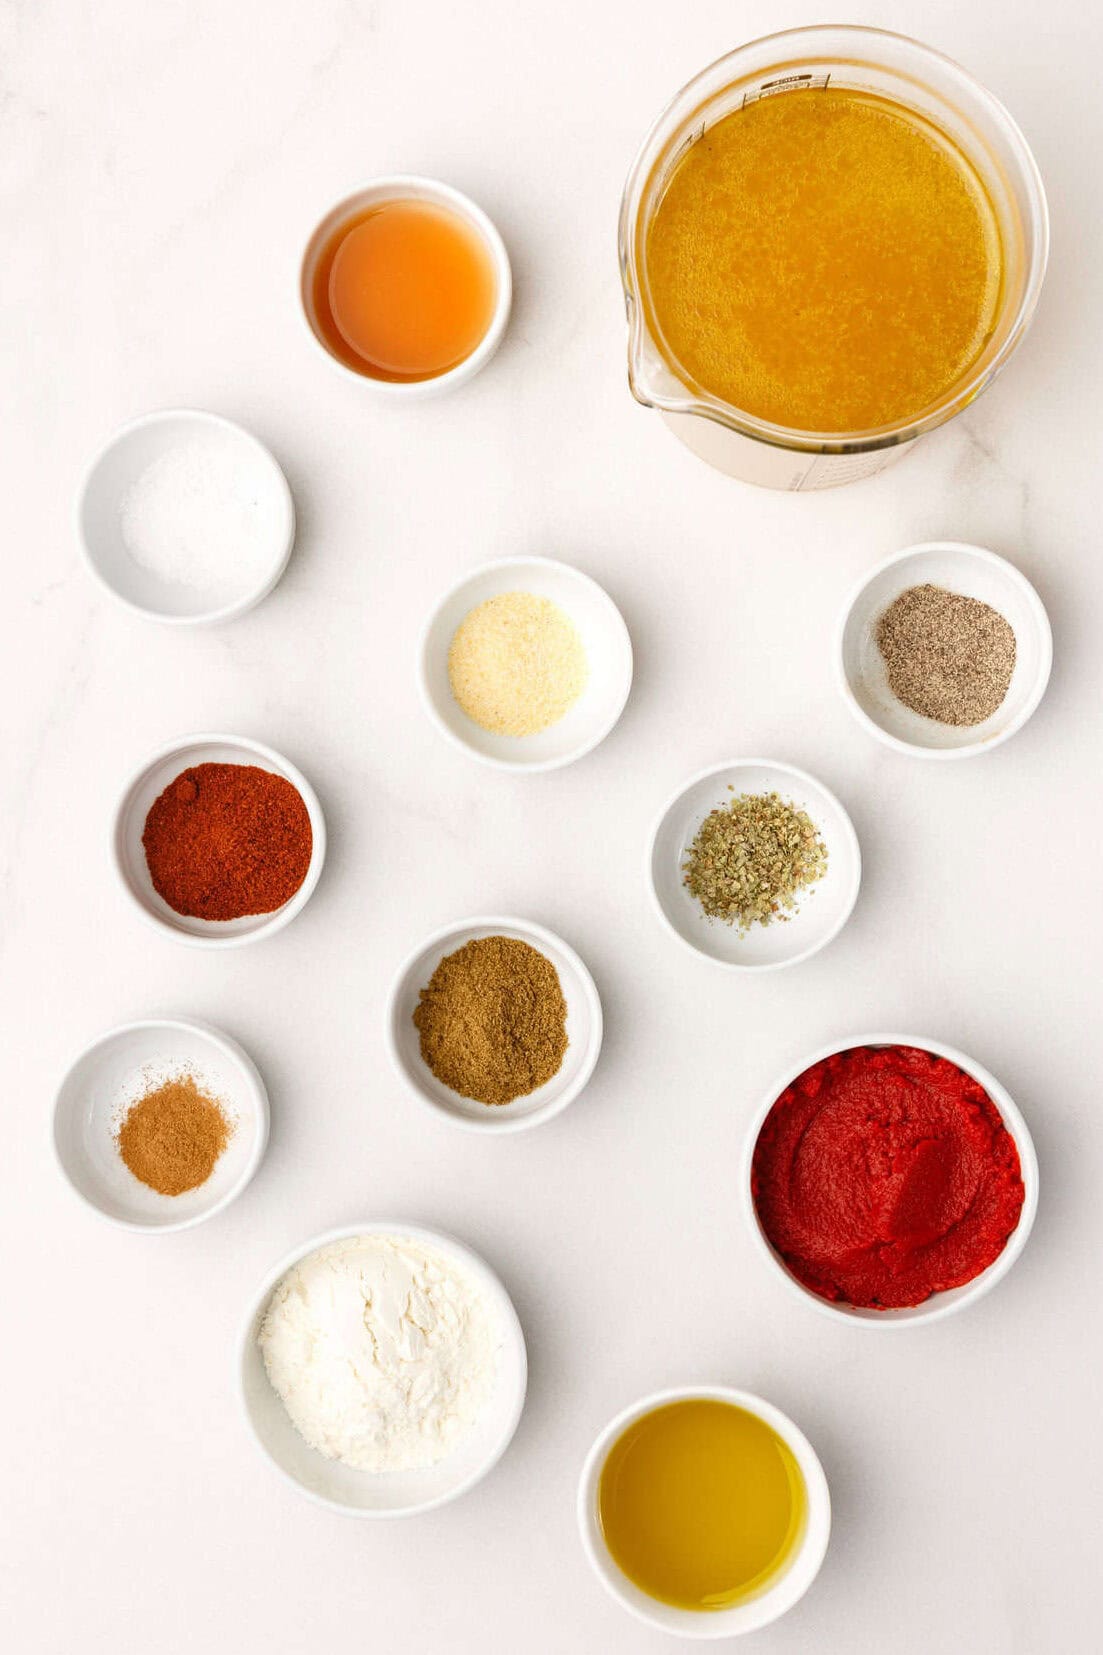 Ingredients to make homemade red enchilada sauce.